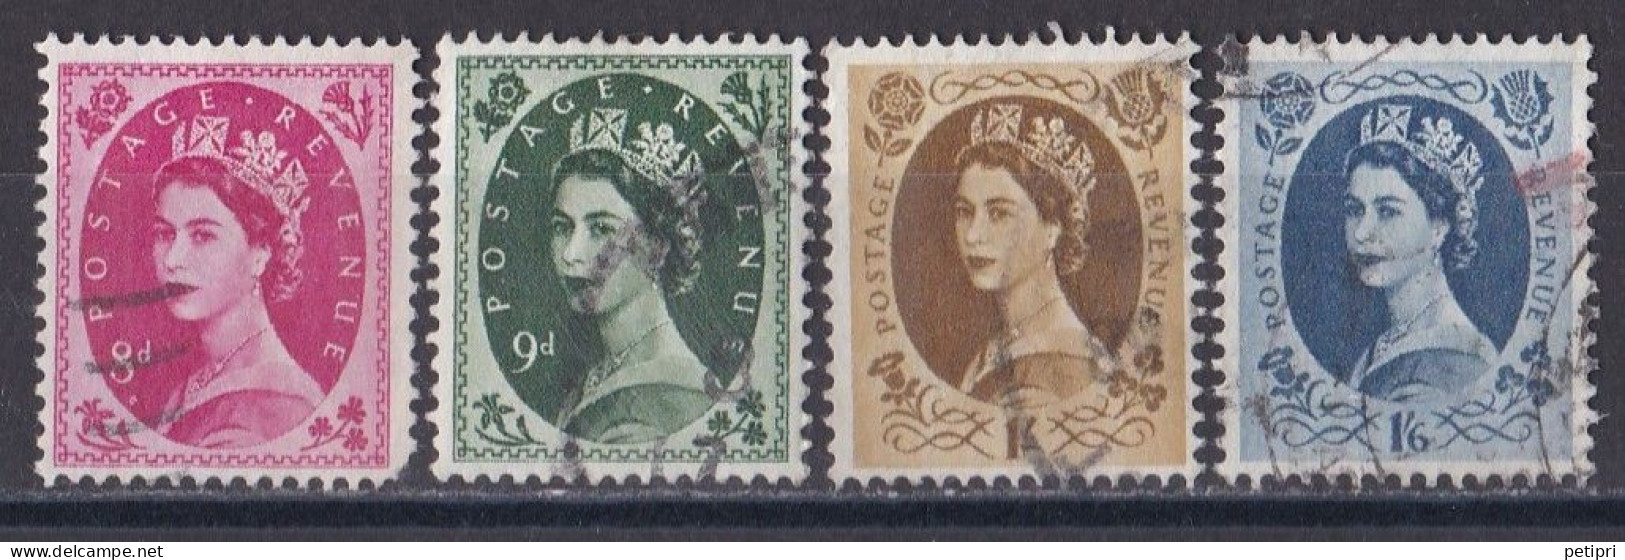 Grande Bretagne - 1952 - 1971 -  Elisabeth II -  Y&T N °  272   273   276   278  Oblitérés - Used Stamps